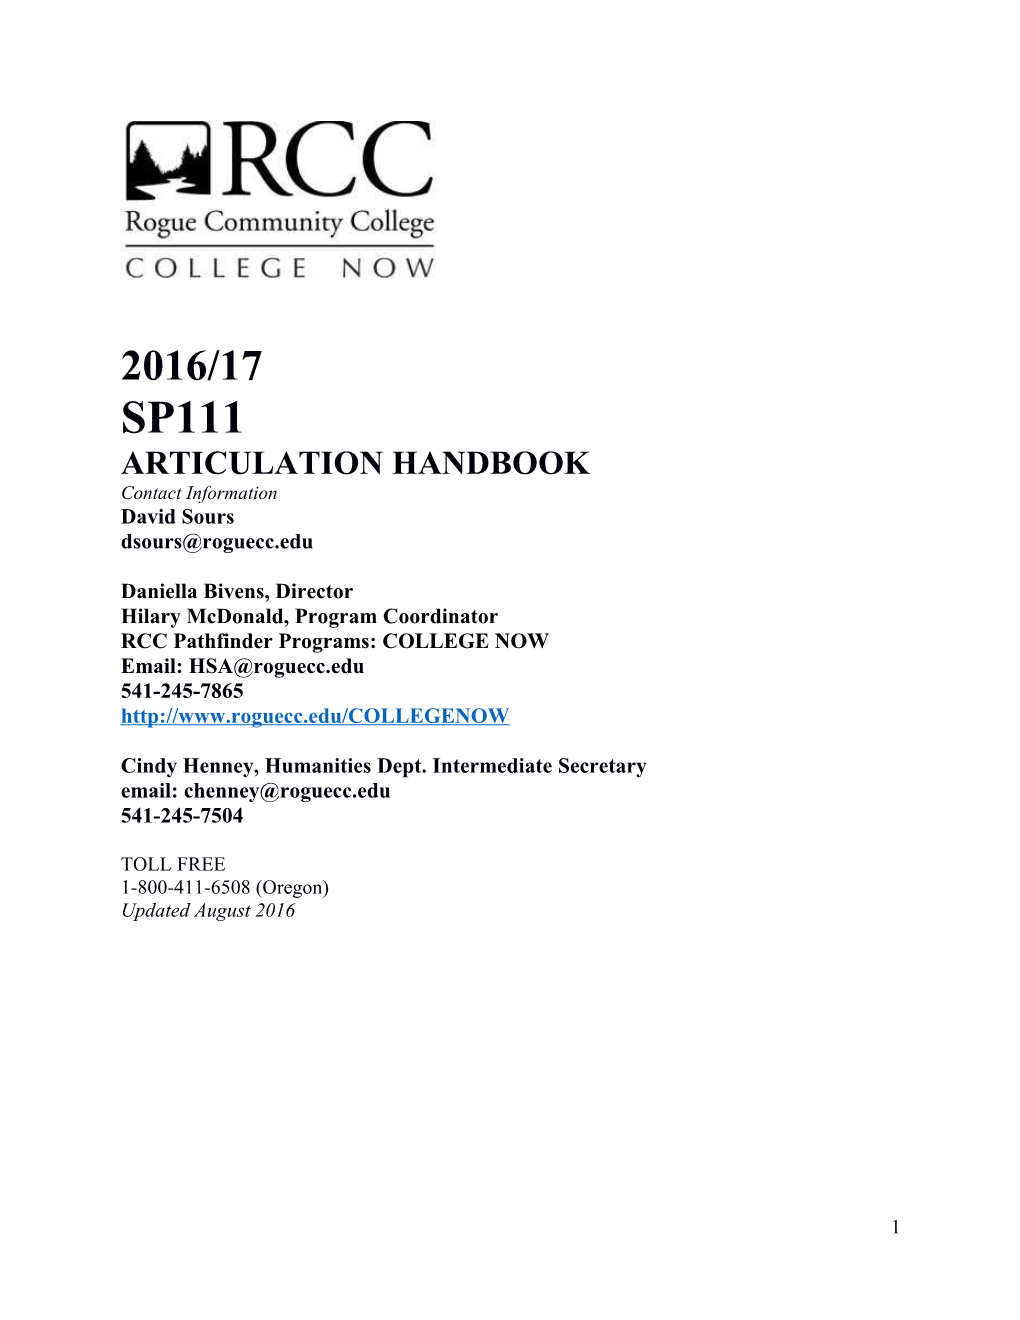 Articulation Handbook